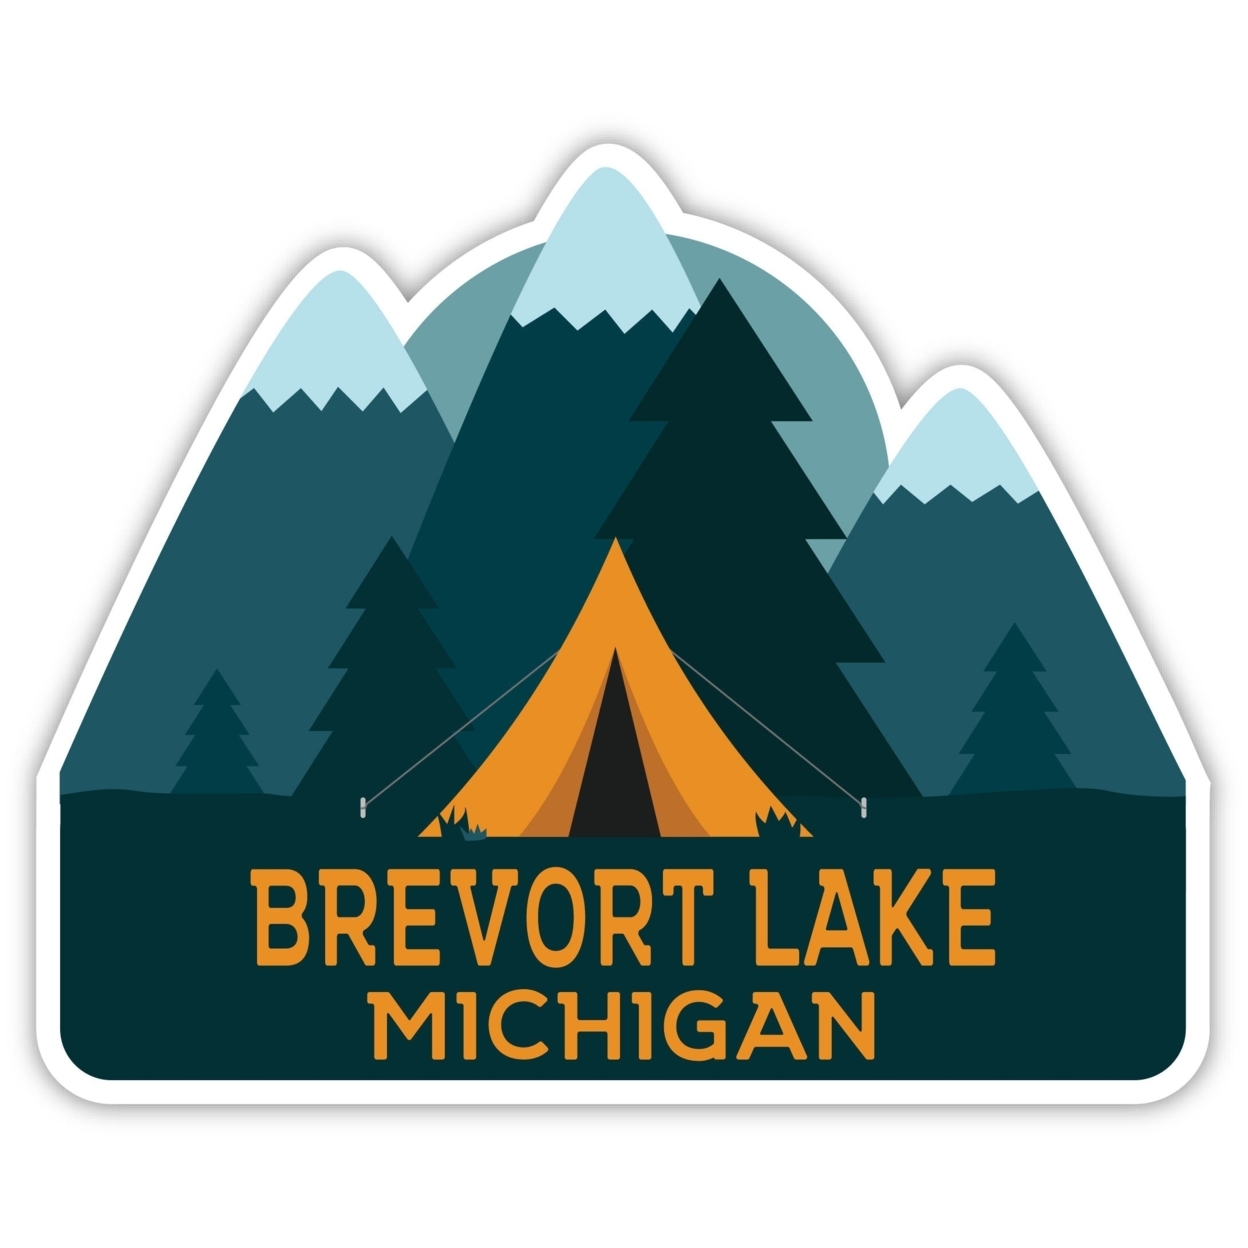 Brevort Lake Michigan Souvenir Decorative Stickers (Choose Theme And Size) - 4-Pack, 10-Inch, Tent